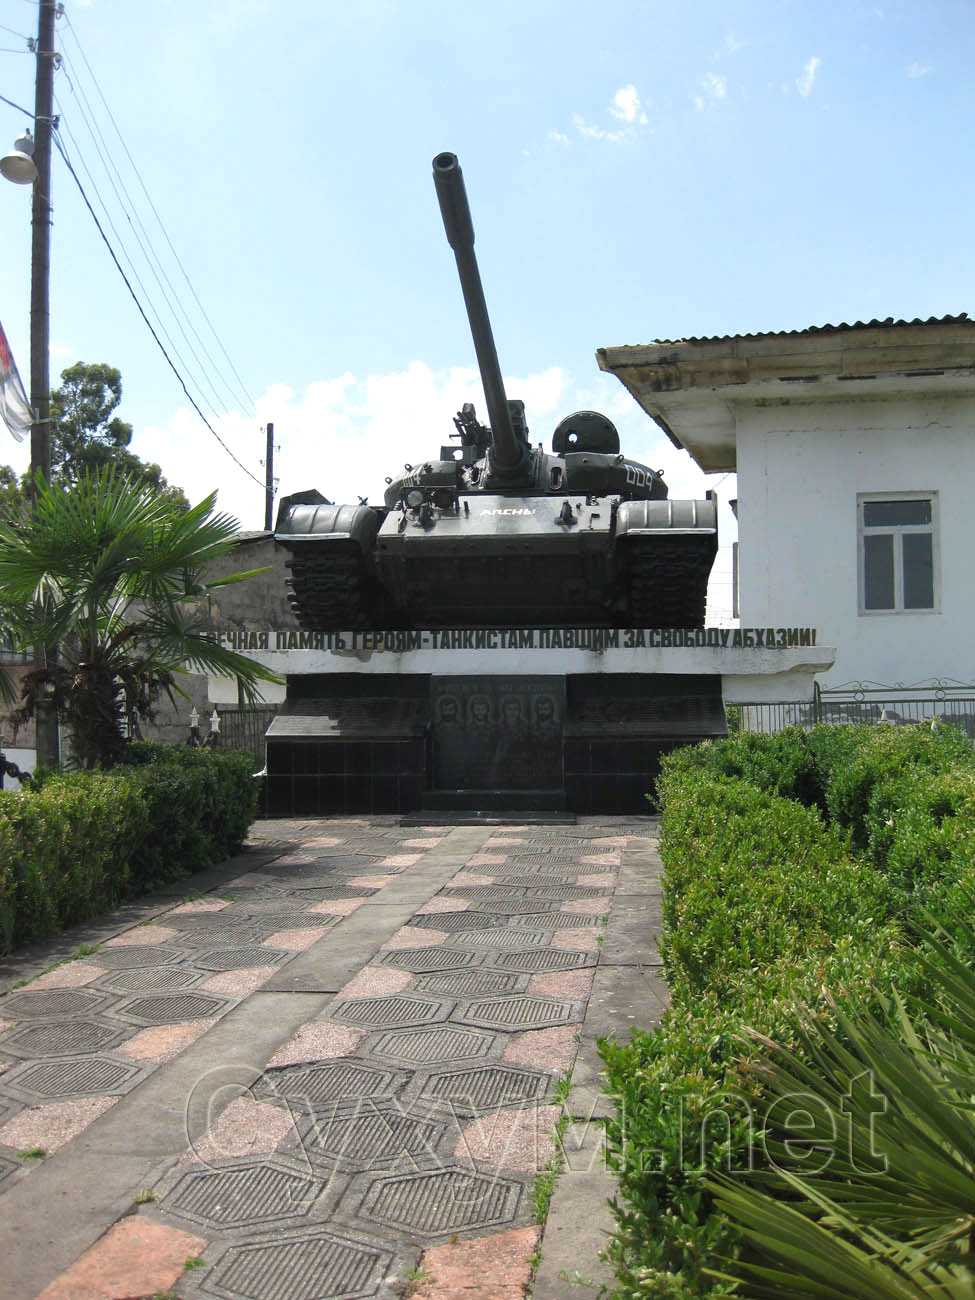 вечная память героям танкистам, павшим за свободу абхазии